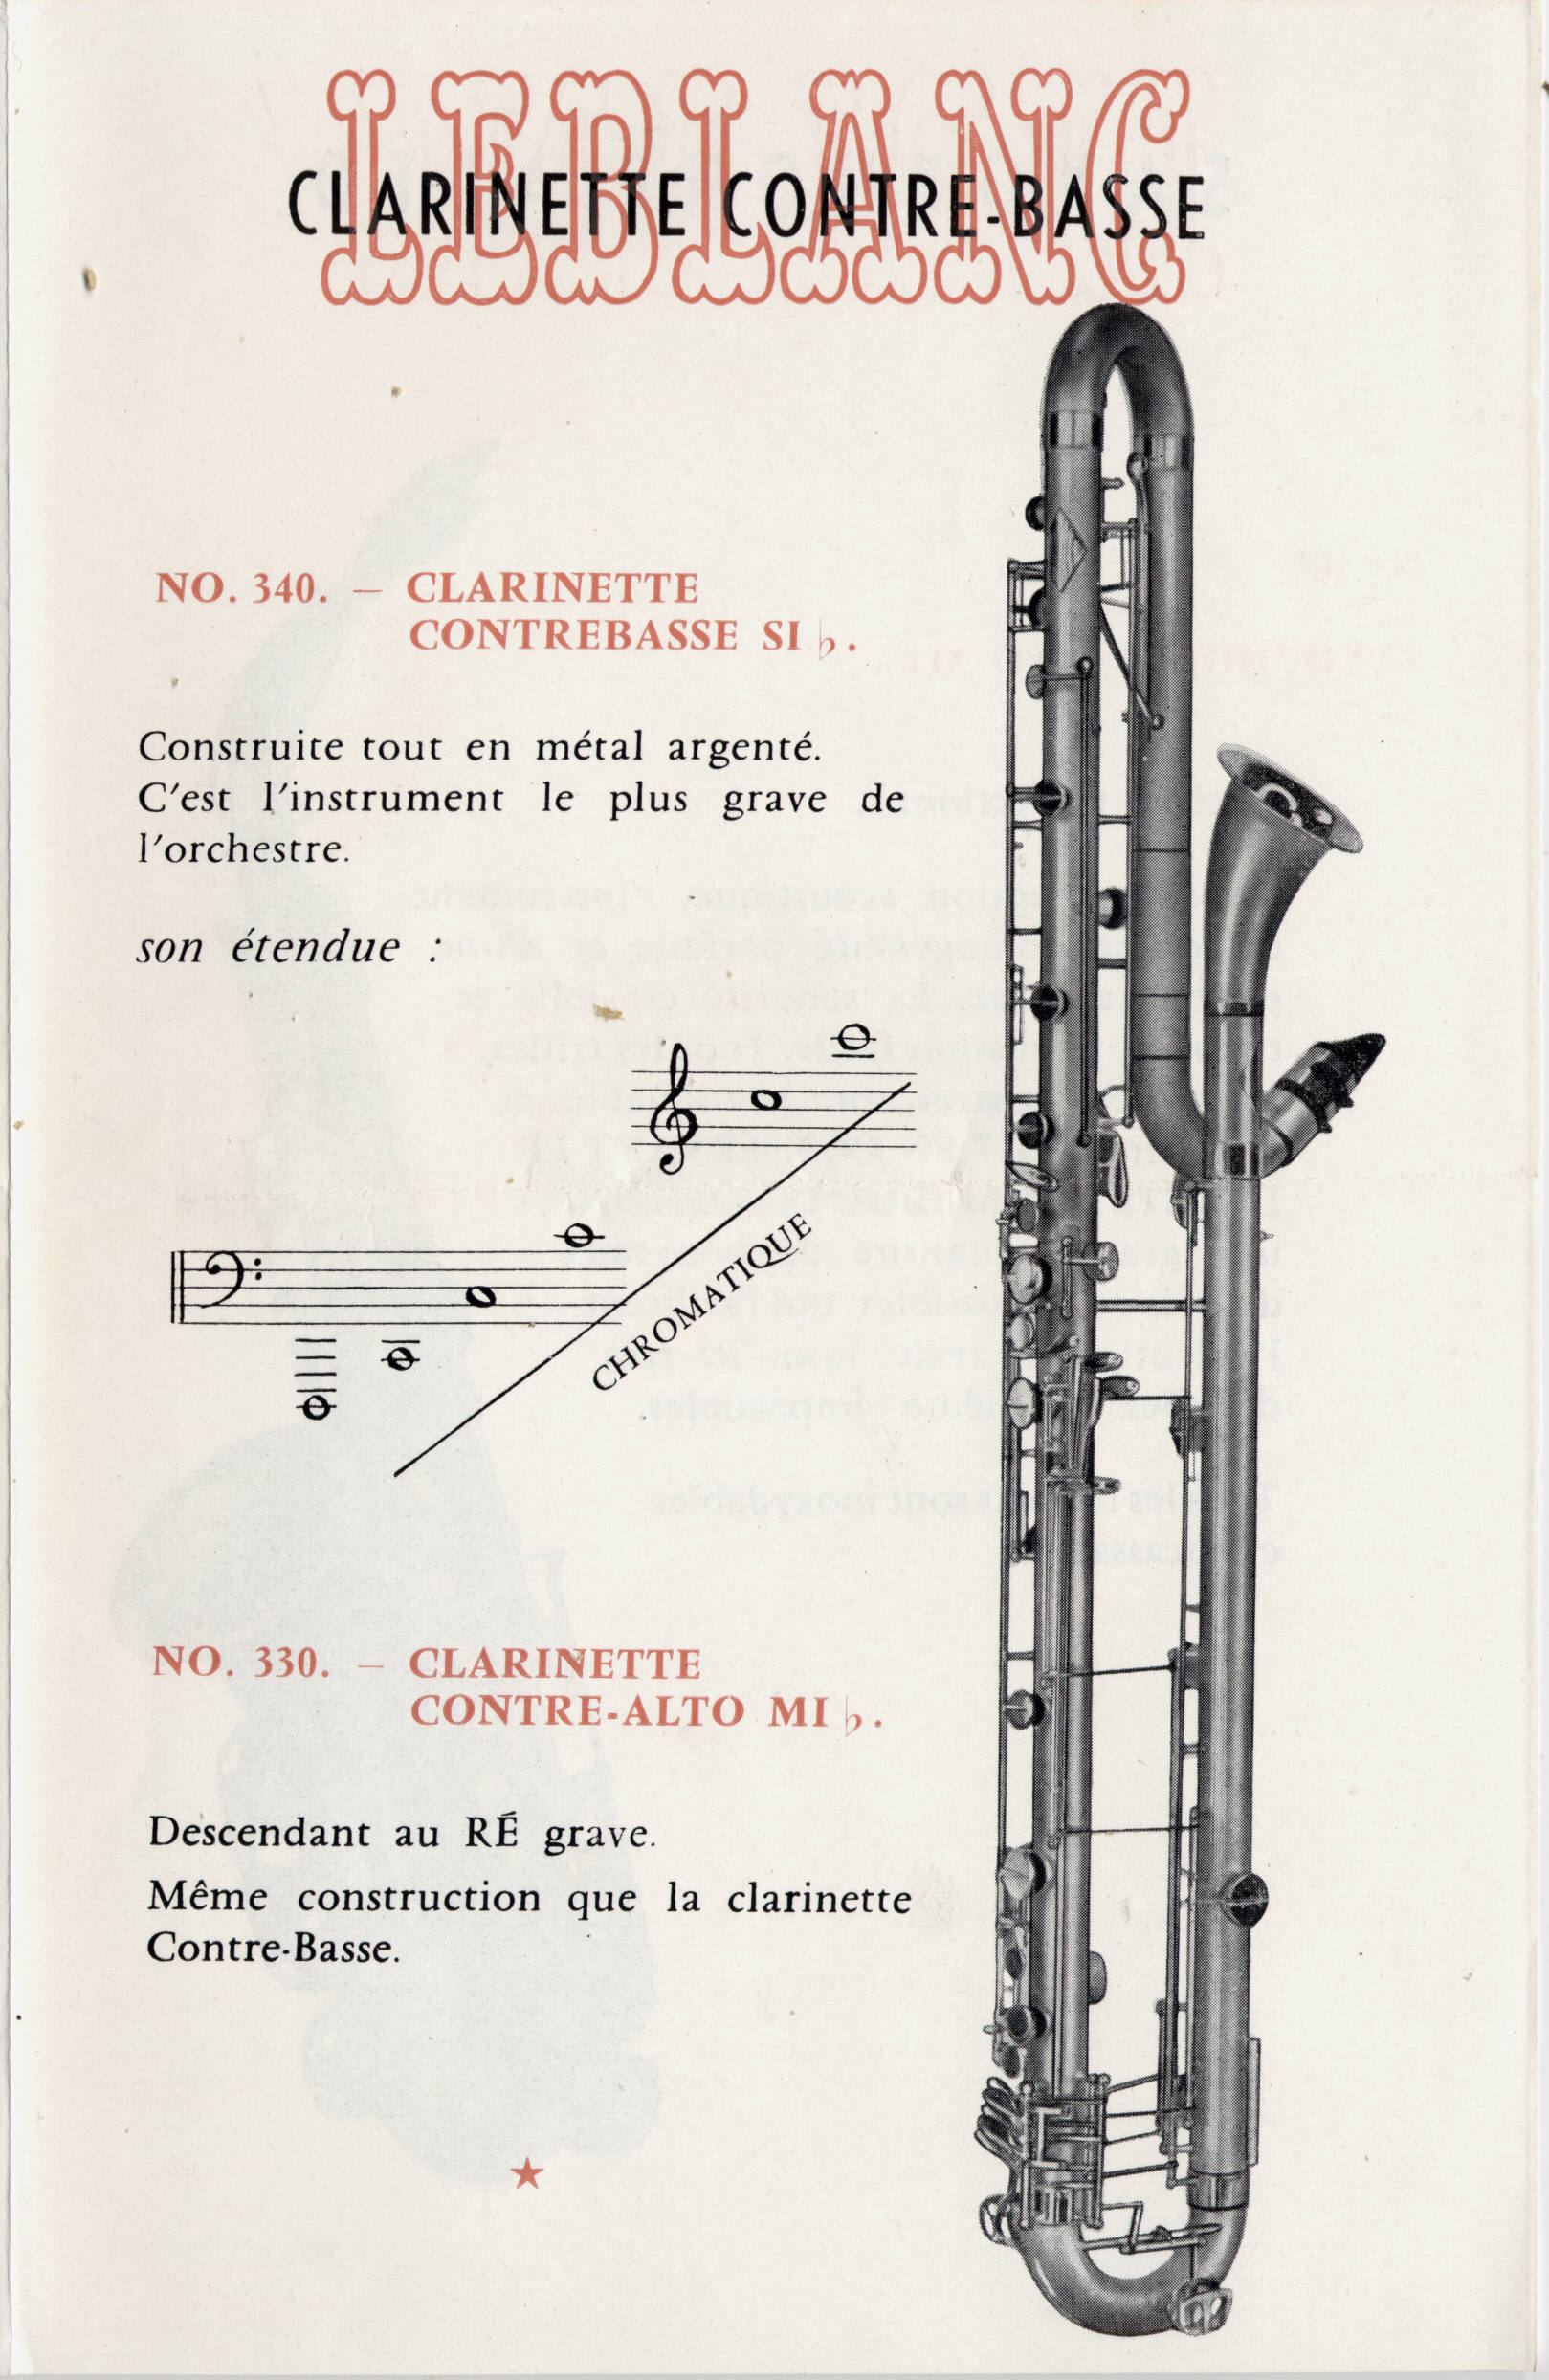 Valentin cases : Affiche registre de la clarinette contrebasse leblanc